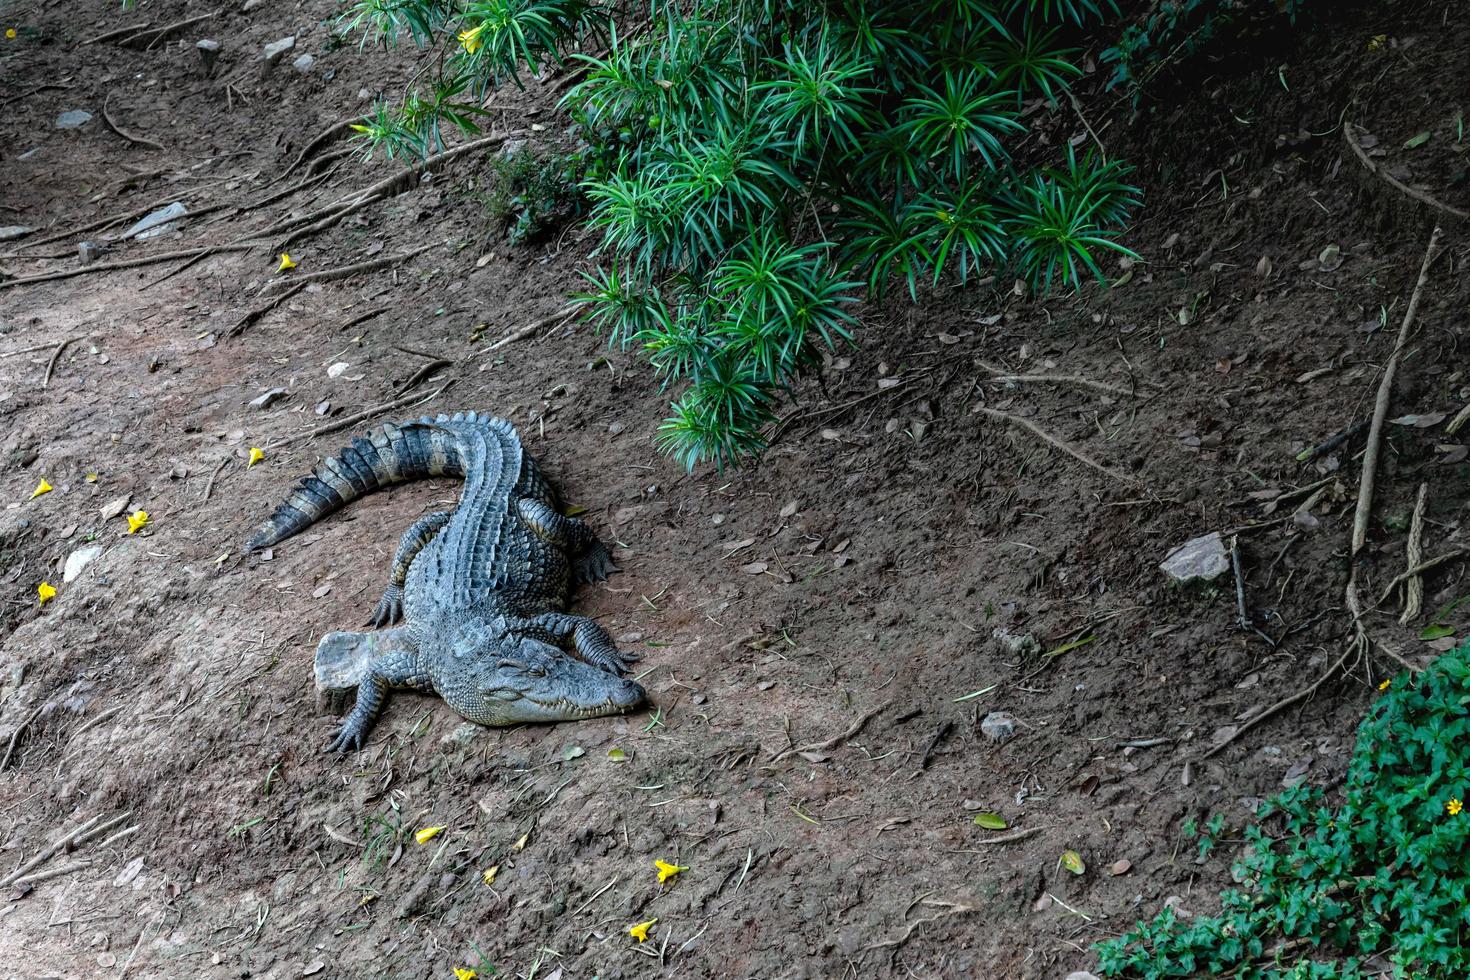 Krokodilfarm in Thailand foto